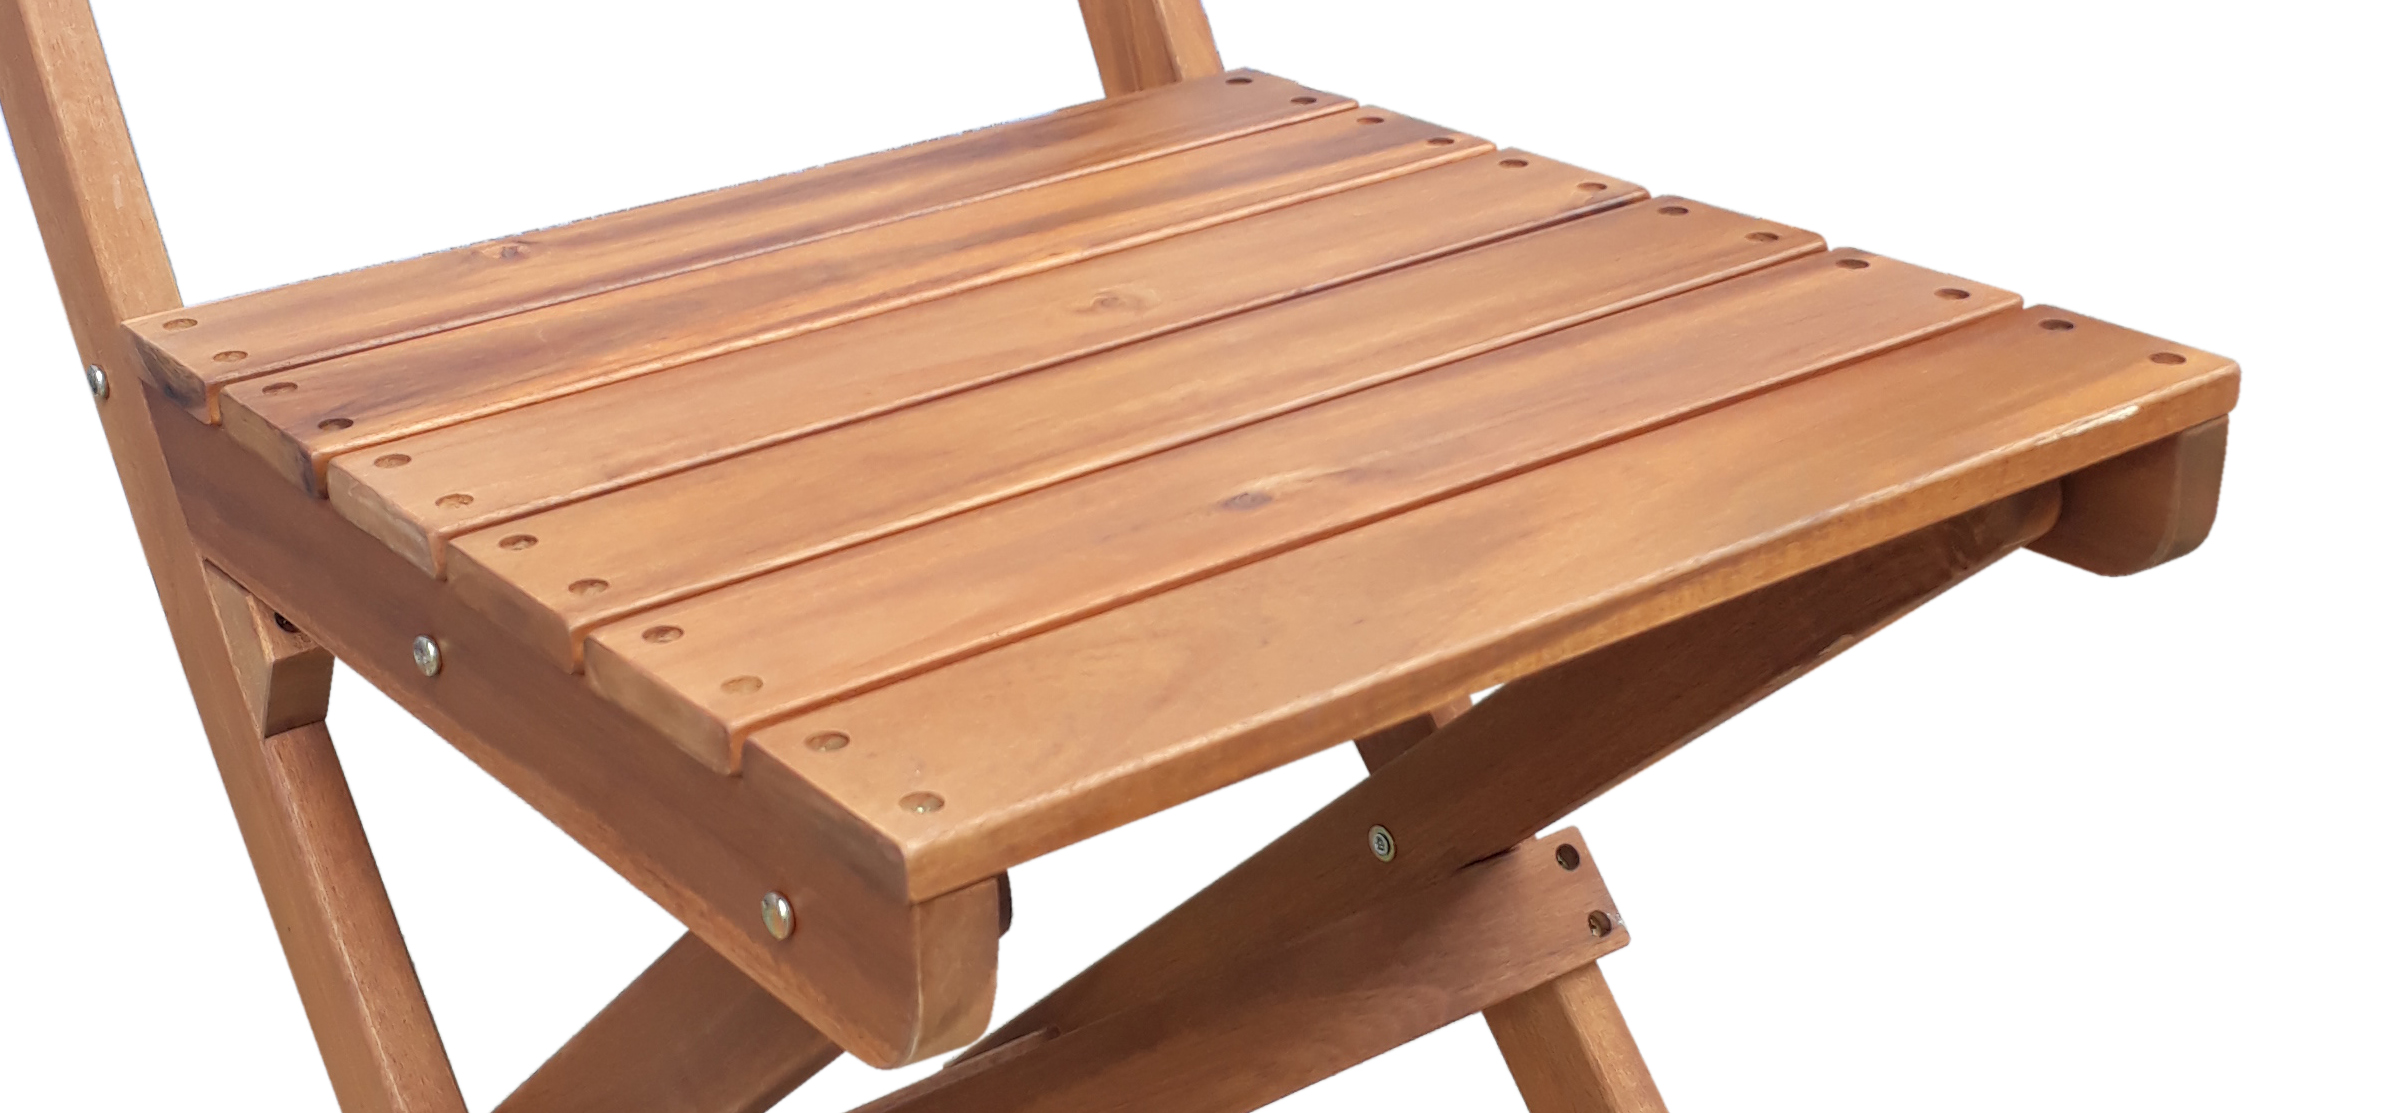 Mainstays Outdoor Patio 3-Piece Wood Bistro Set, Natural Color - image 4 of 16